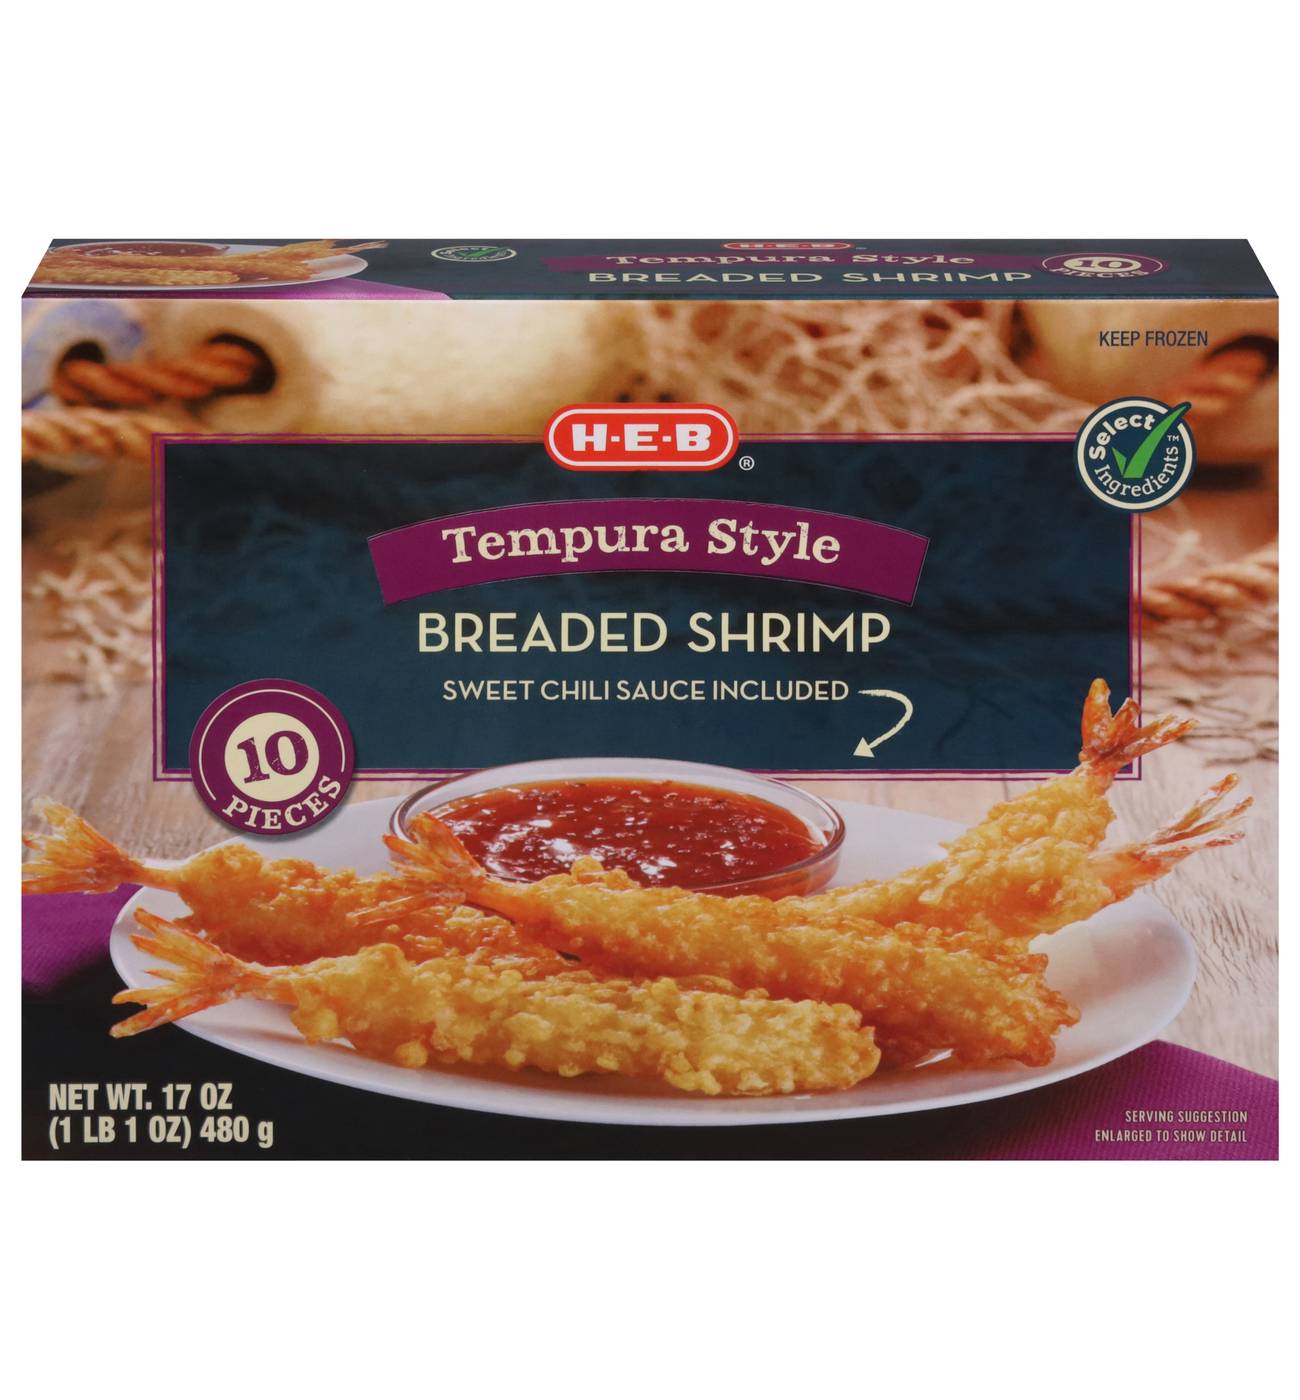 H-E-B Frozen Tempura-Style Breaded Shrimp with Sweet Chili Sauce; image 1 of 2